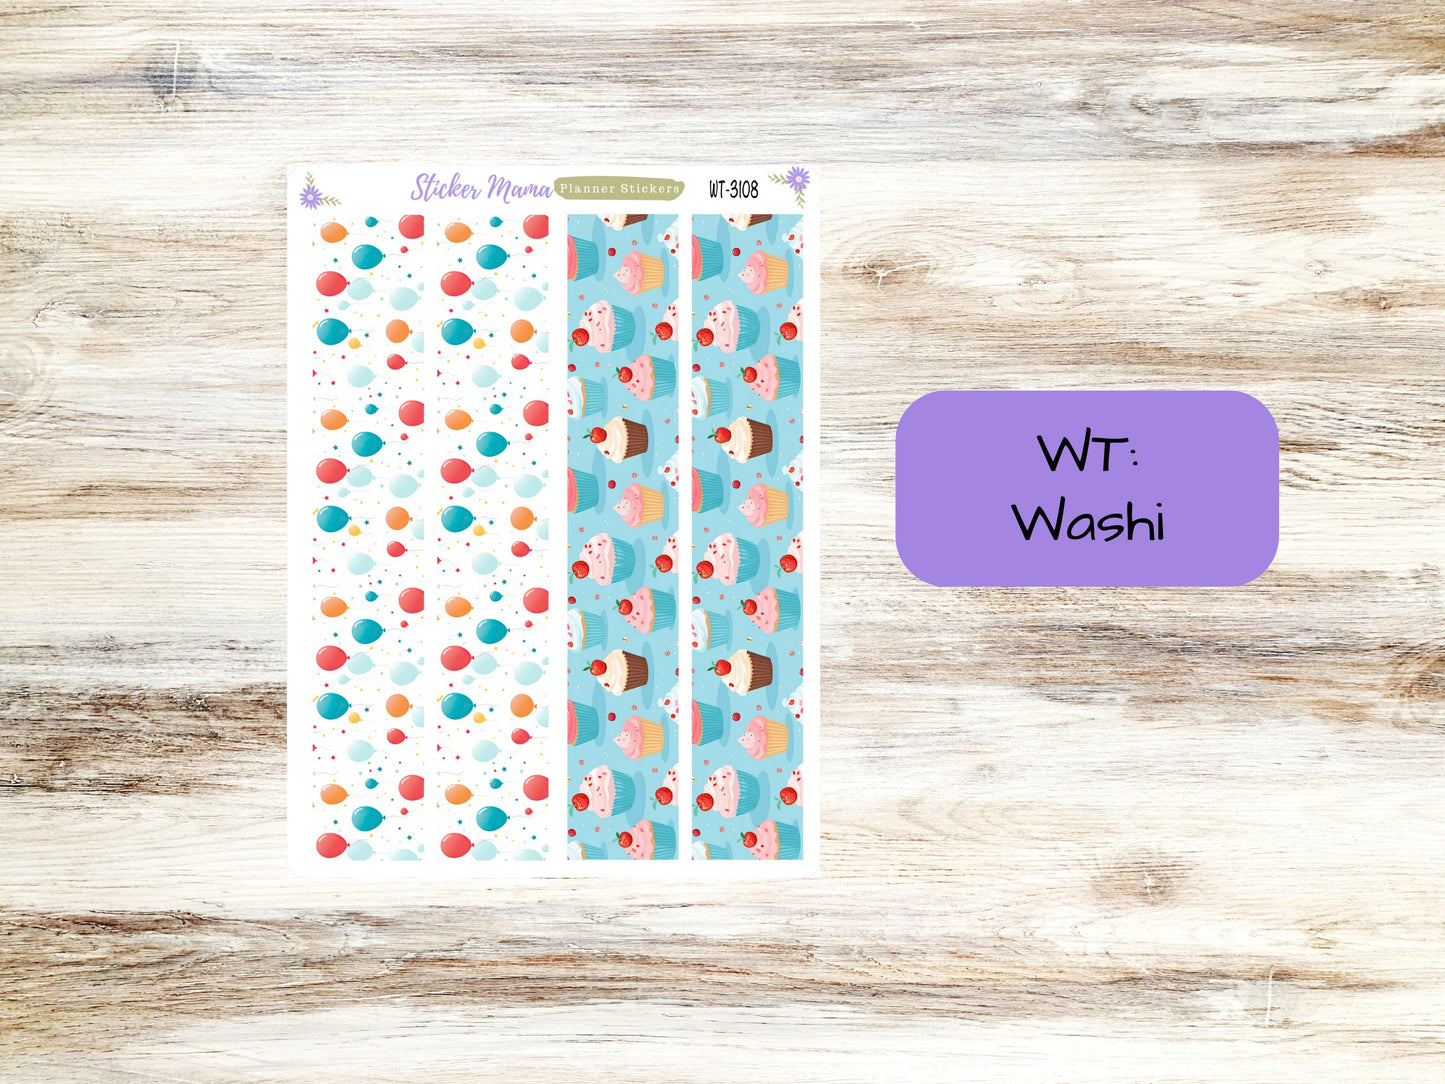 WASHI PLANNER STICKERS || 3108 || Happy Birthday! || Washi Stickers || Planner Stickers || Washi for Planners